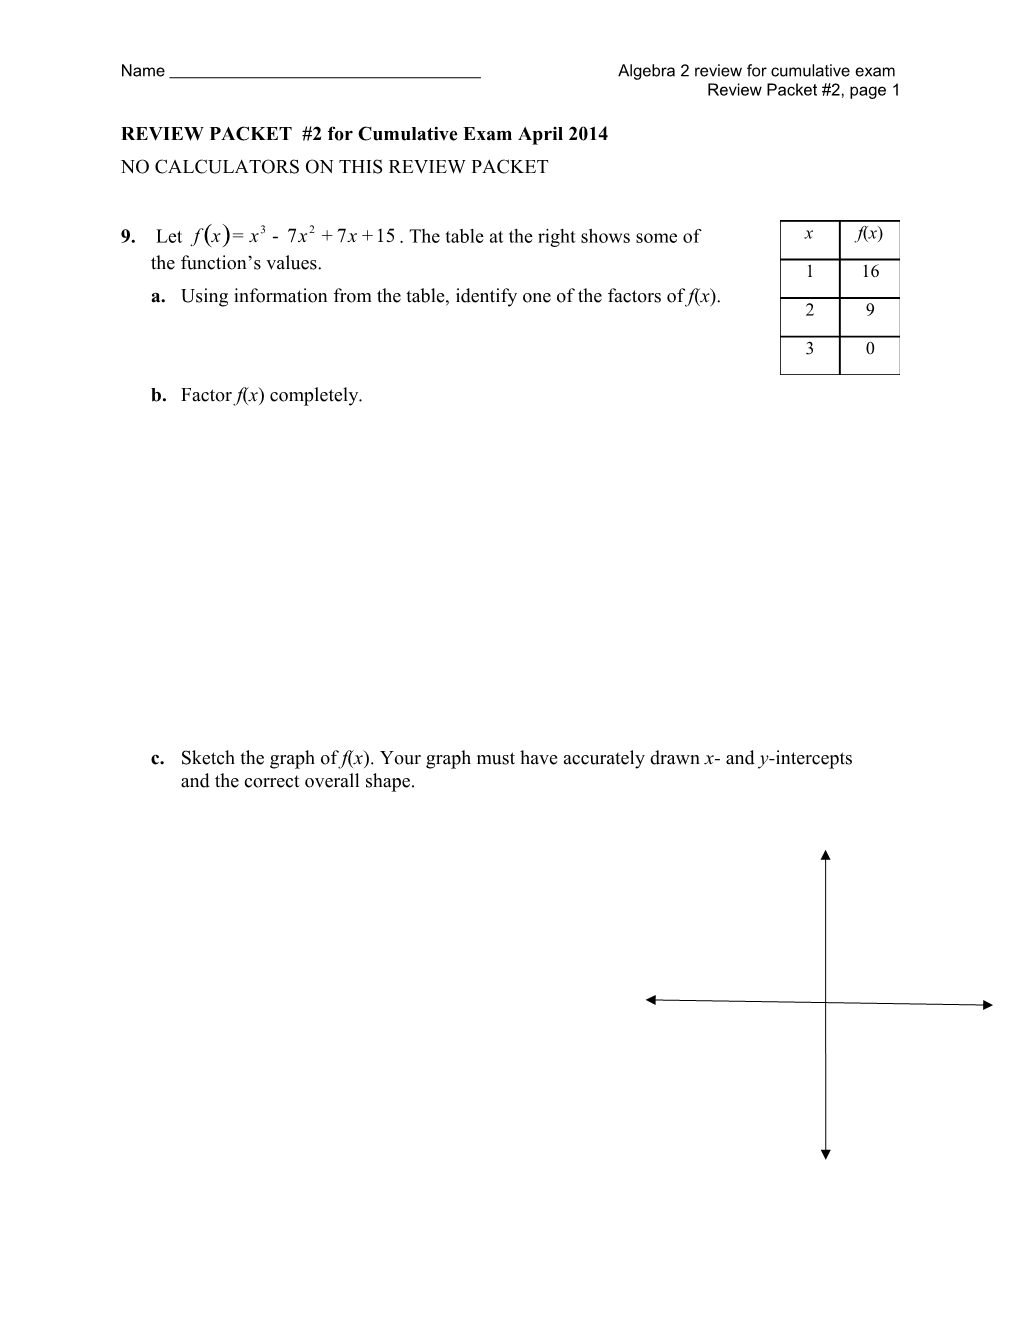 REVIEW PACKET #2 for Cumulative Exam April 2014